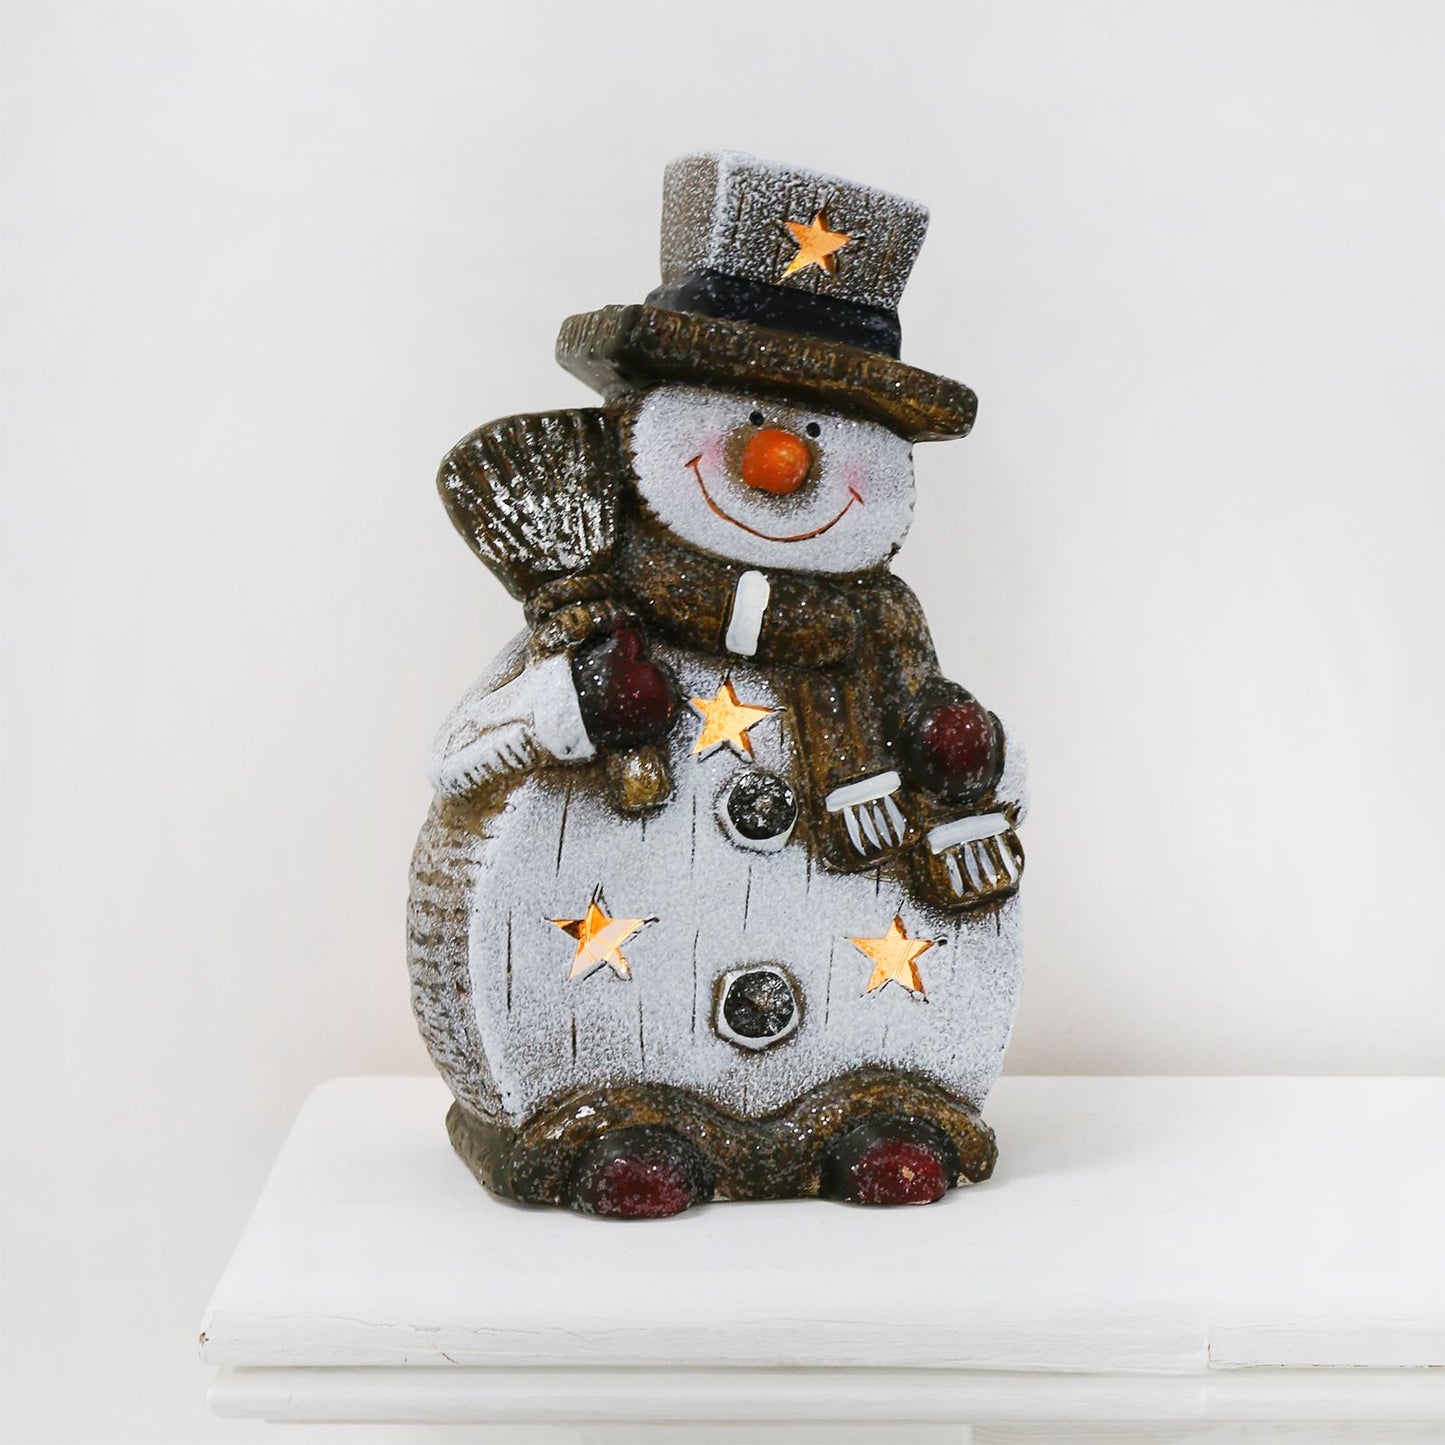 Mr Crimbo 9" Light Up Christmas Ornament Ceramic Figure - MrCrimbo.co.uk -XS5780 - Snowman -ceramic figure